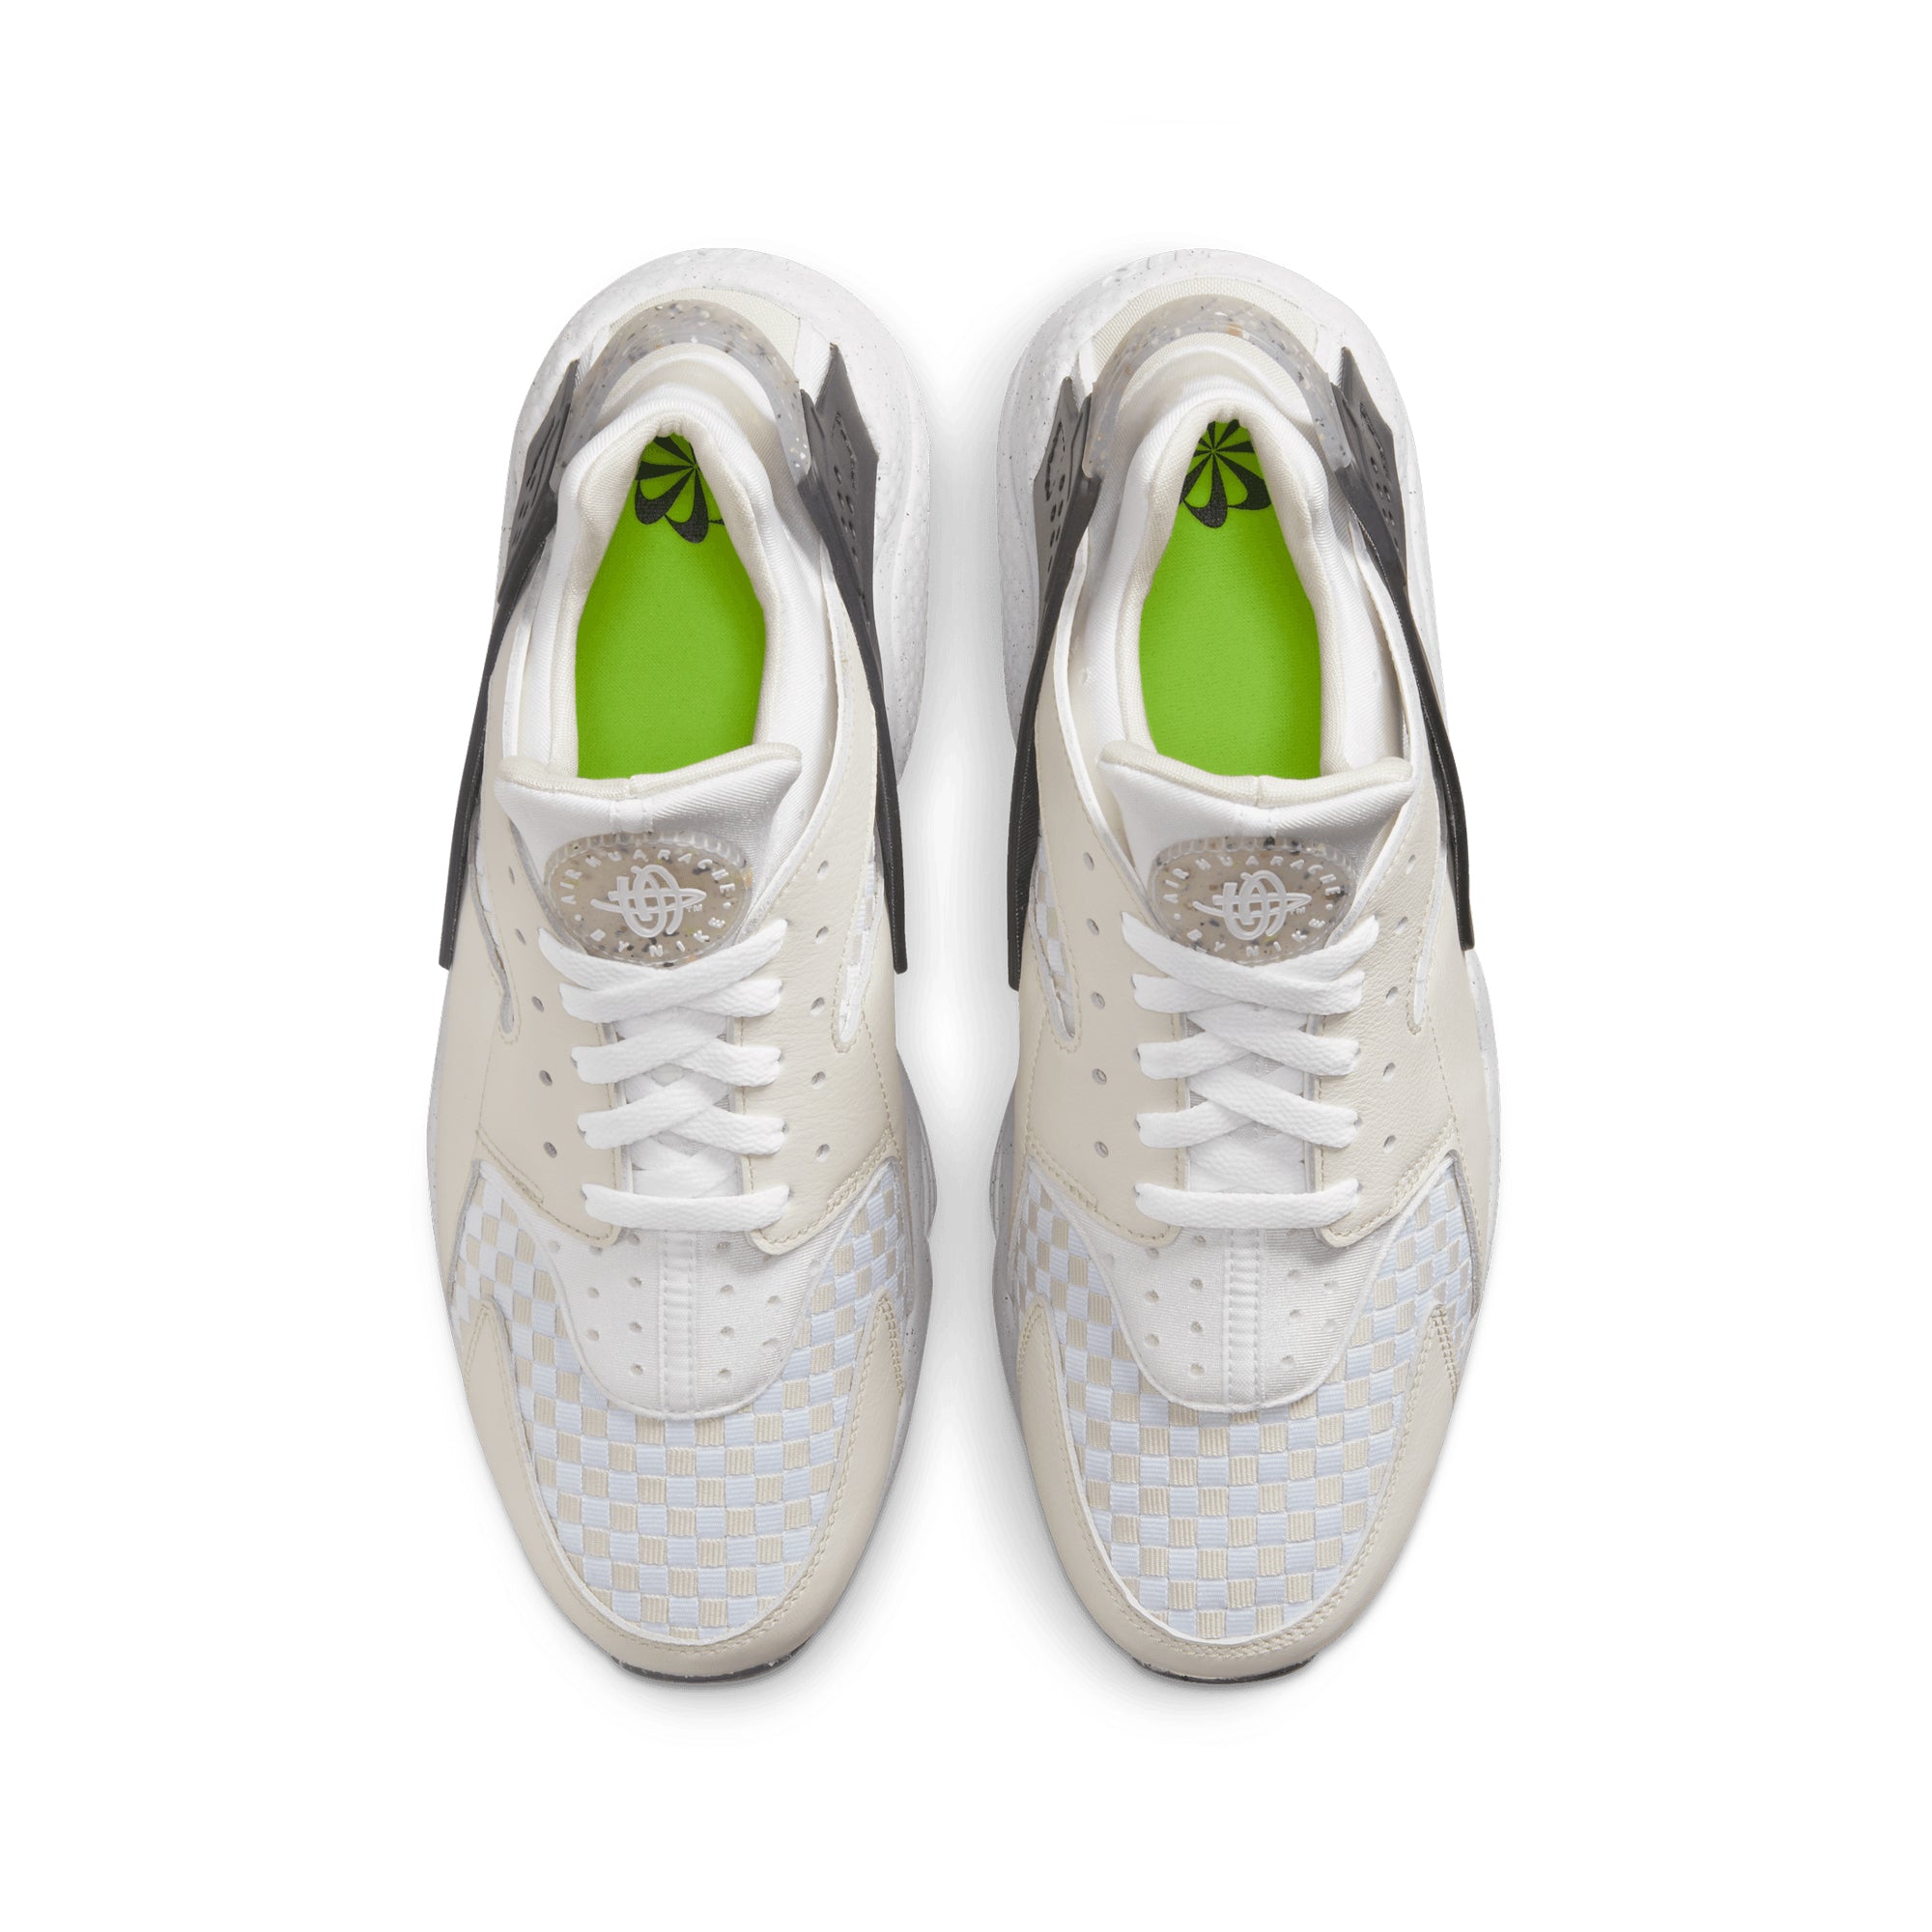 Nike Air Huarache PRM  Shoe Shop! Review and On-feet! 